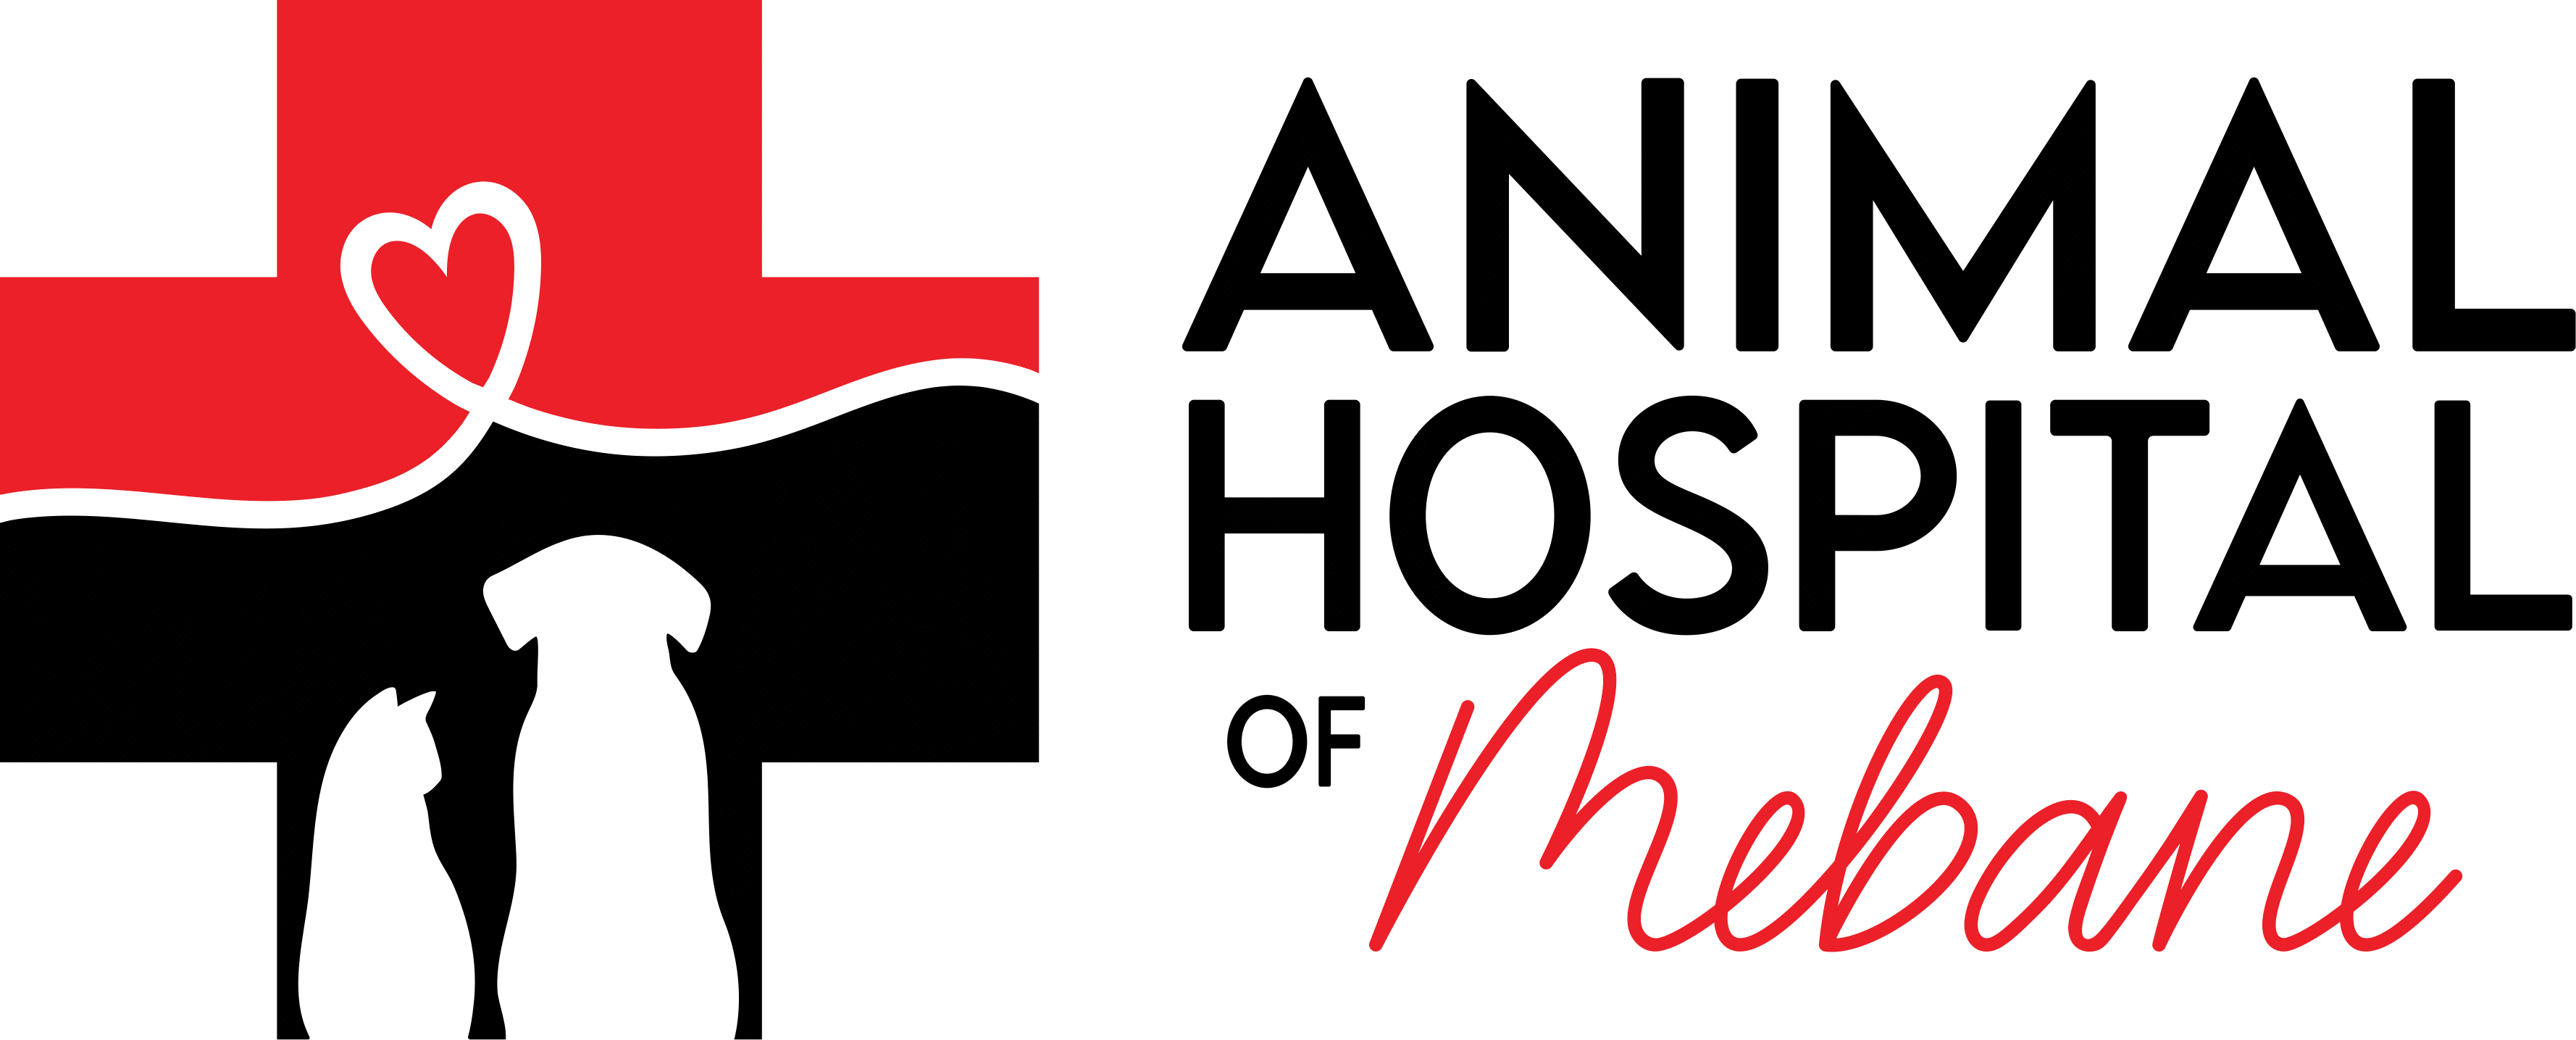 Animal Hospital Of Mebane